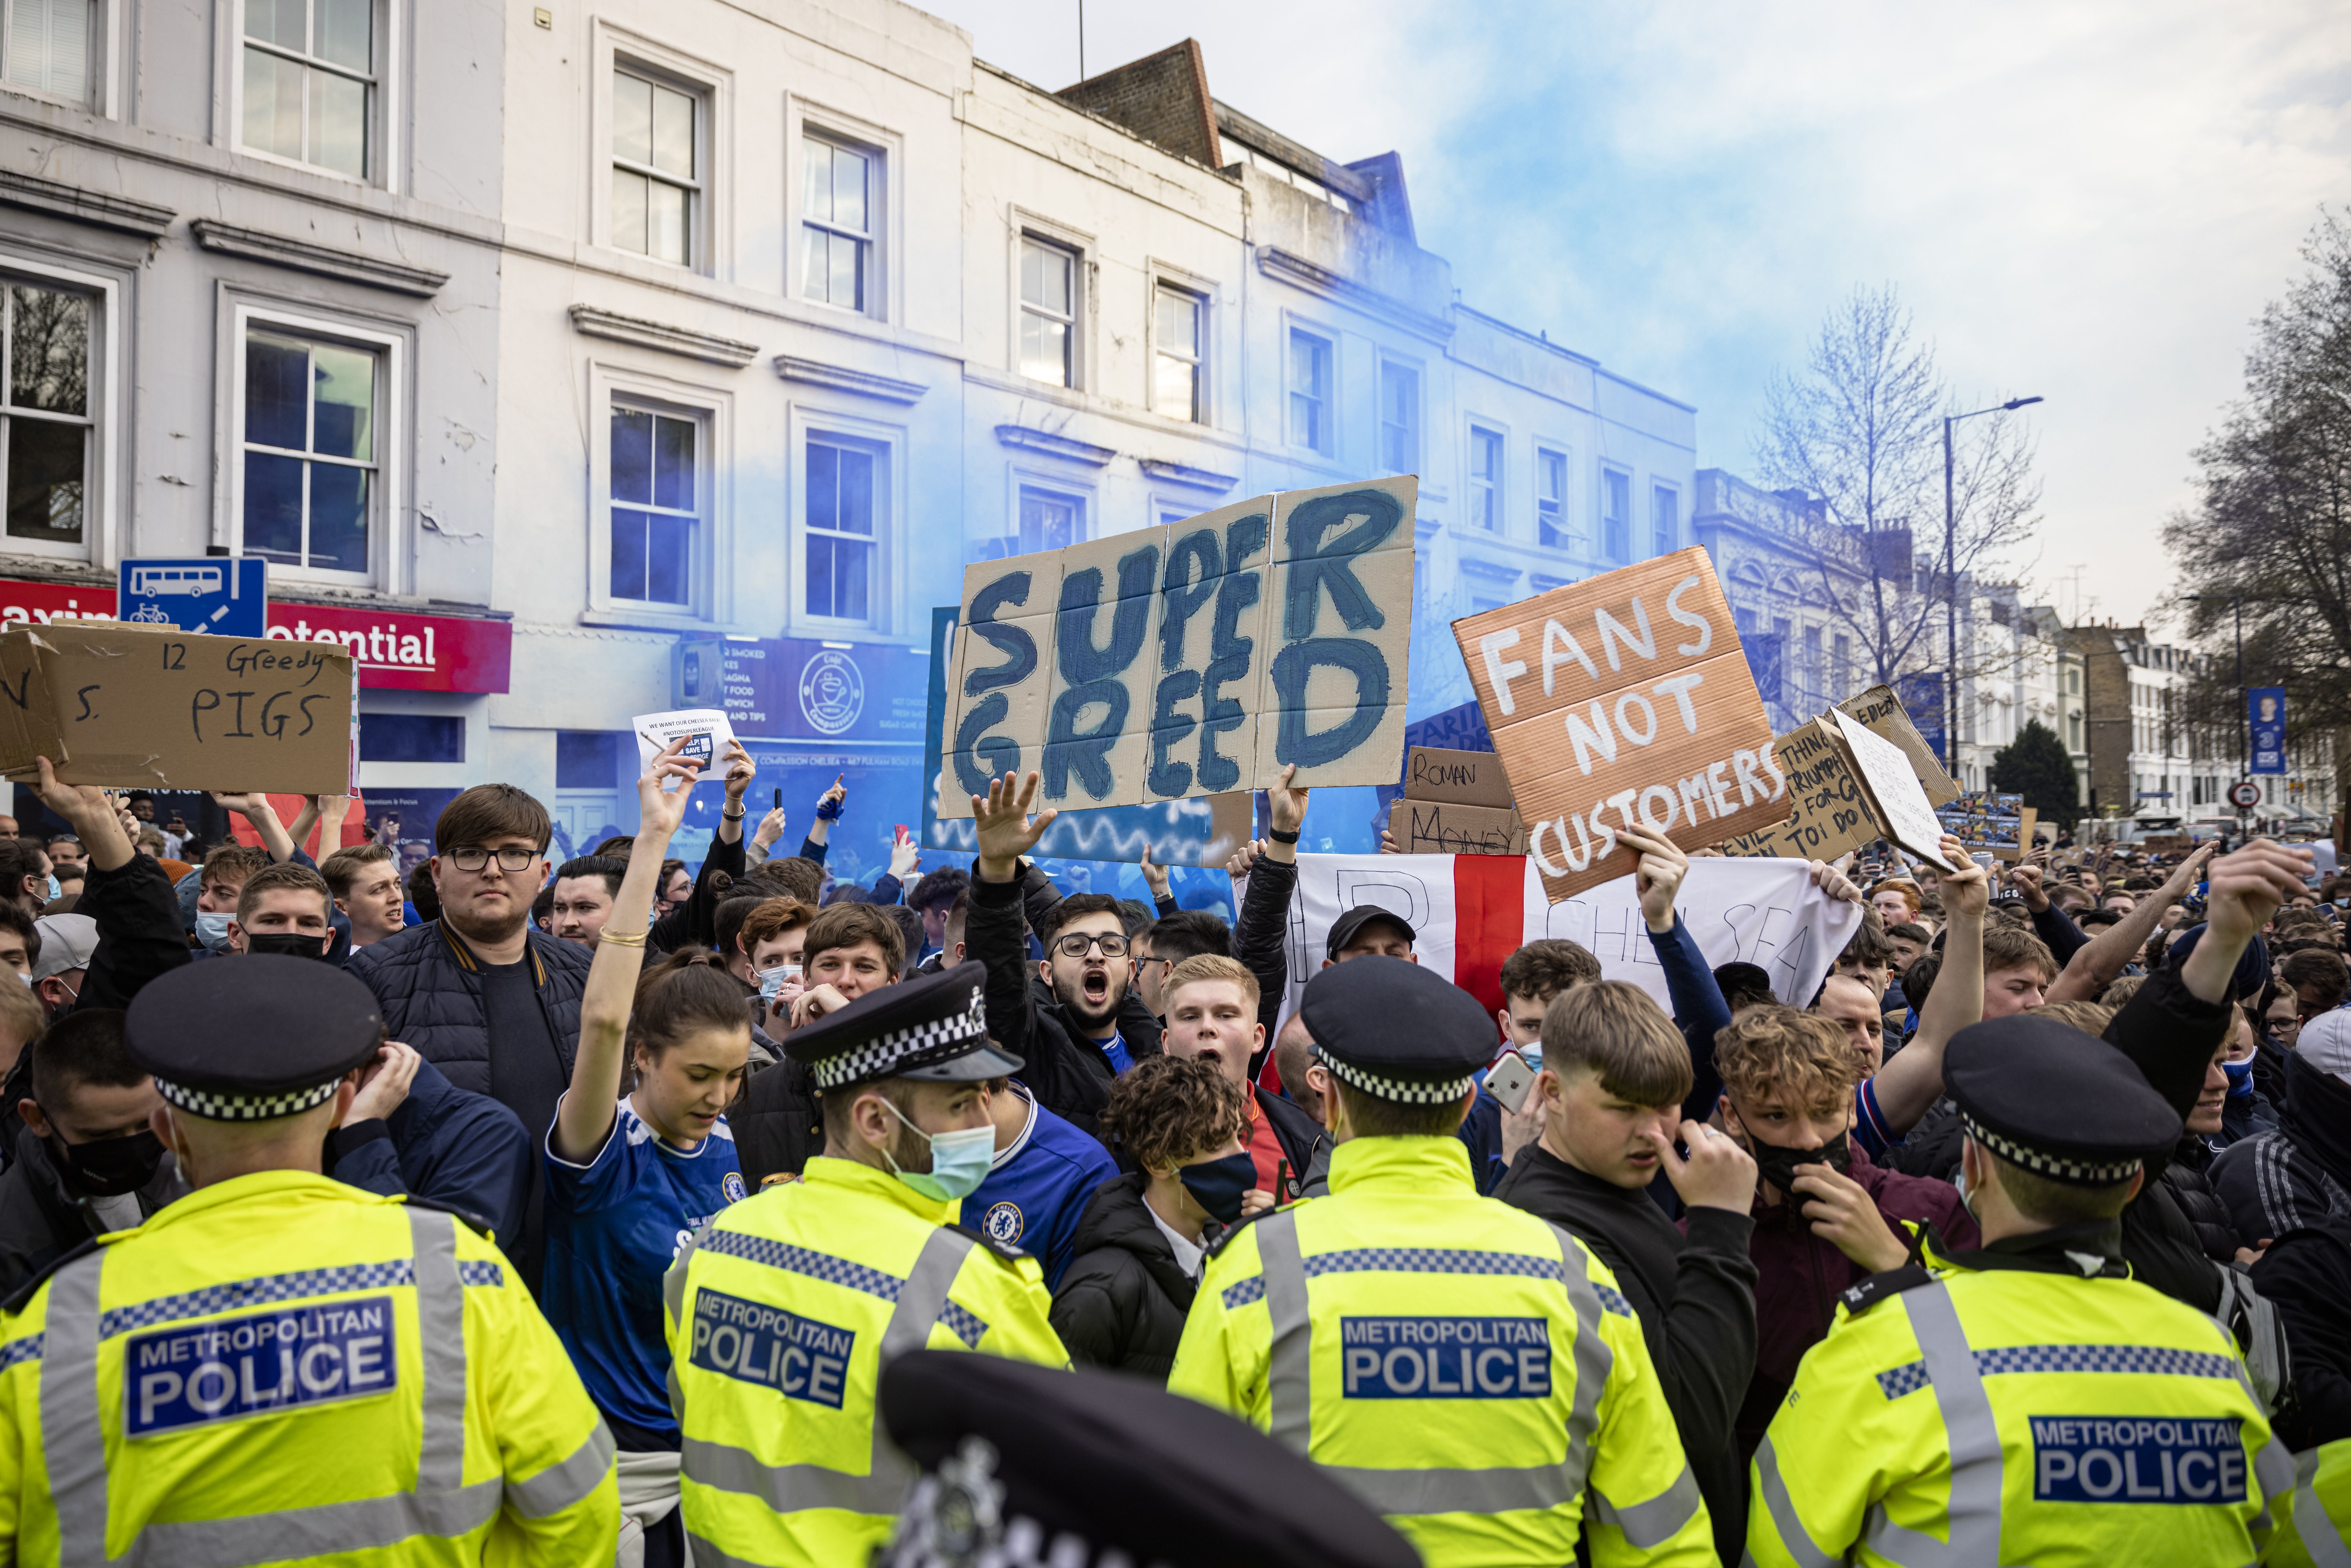 Chelsea fans protesting outside Stamford Bridge.